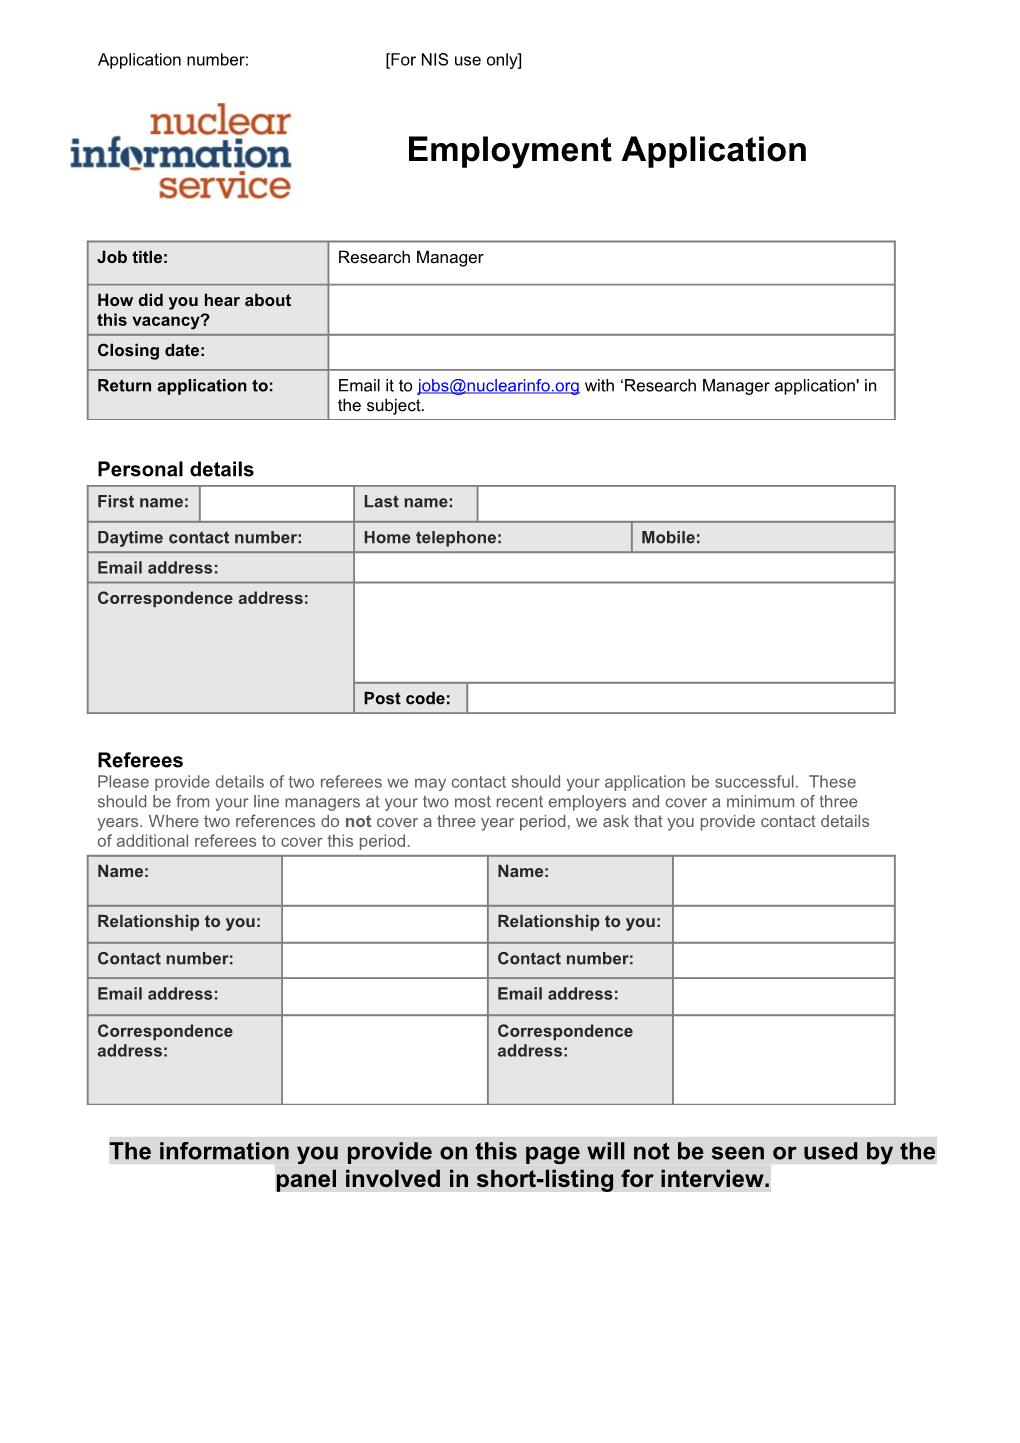 NIS Employment App Form